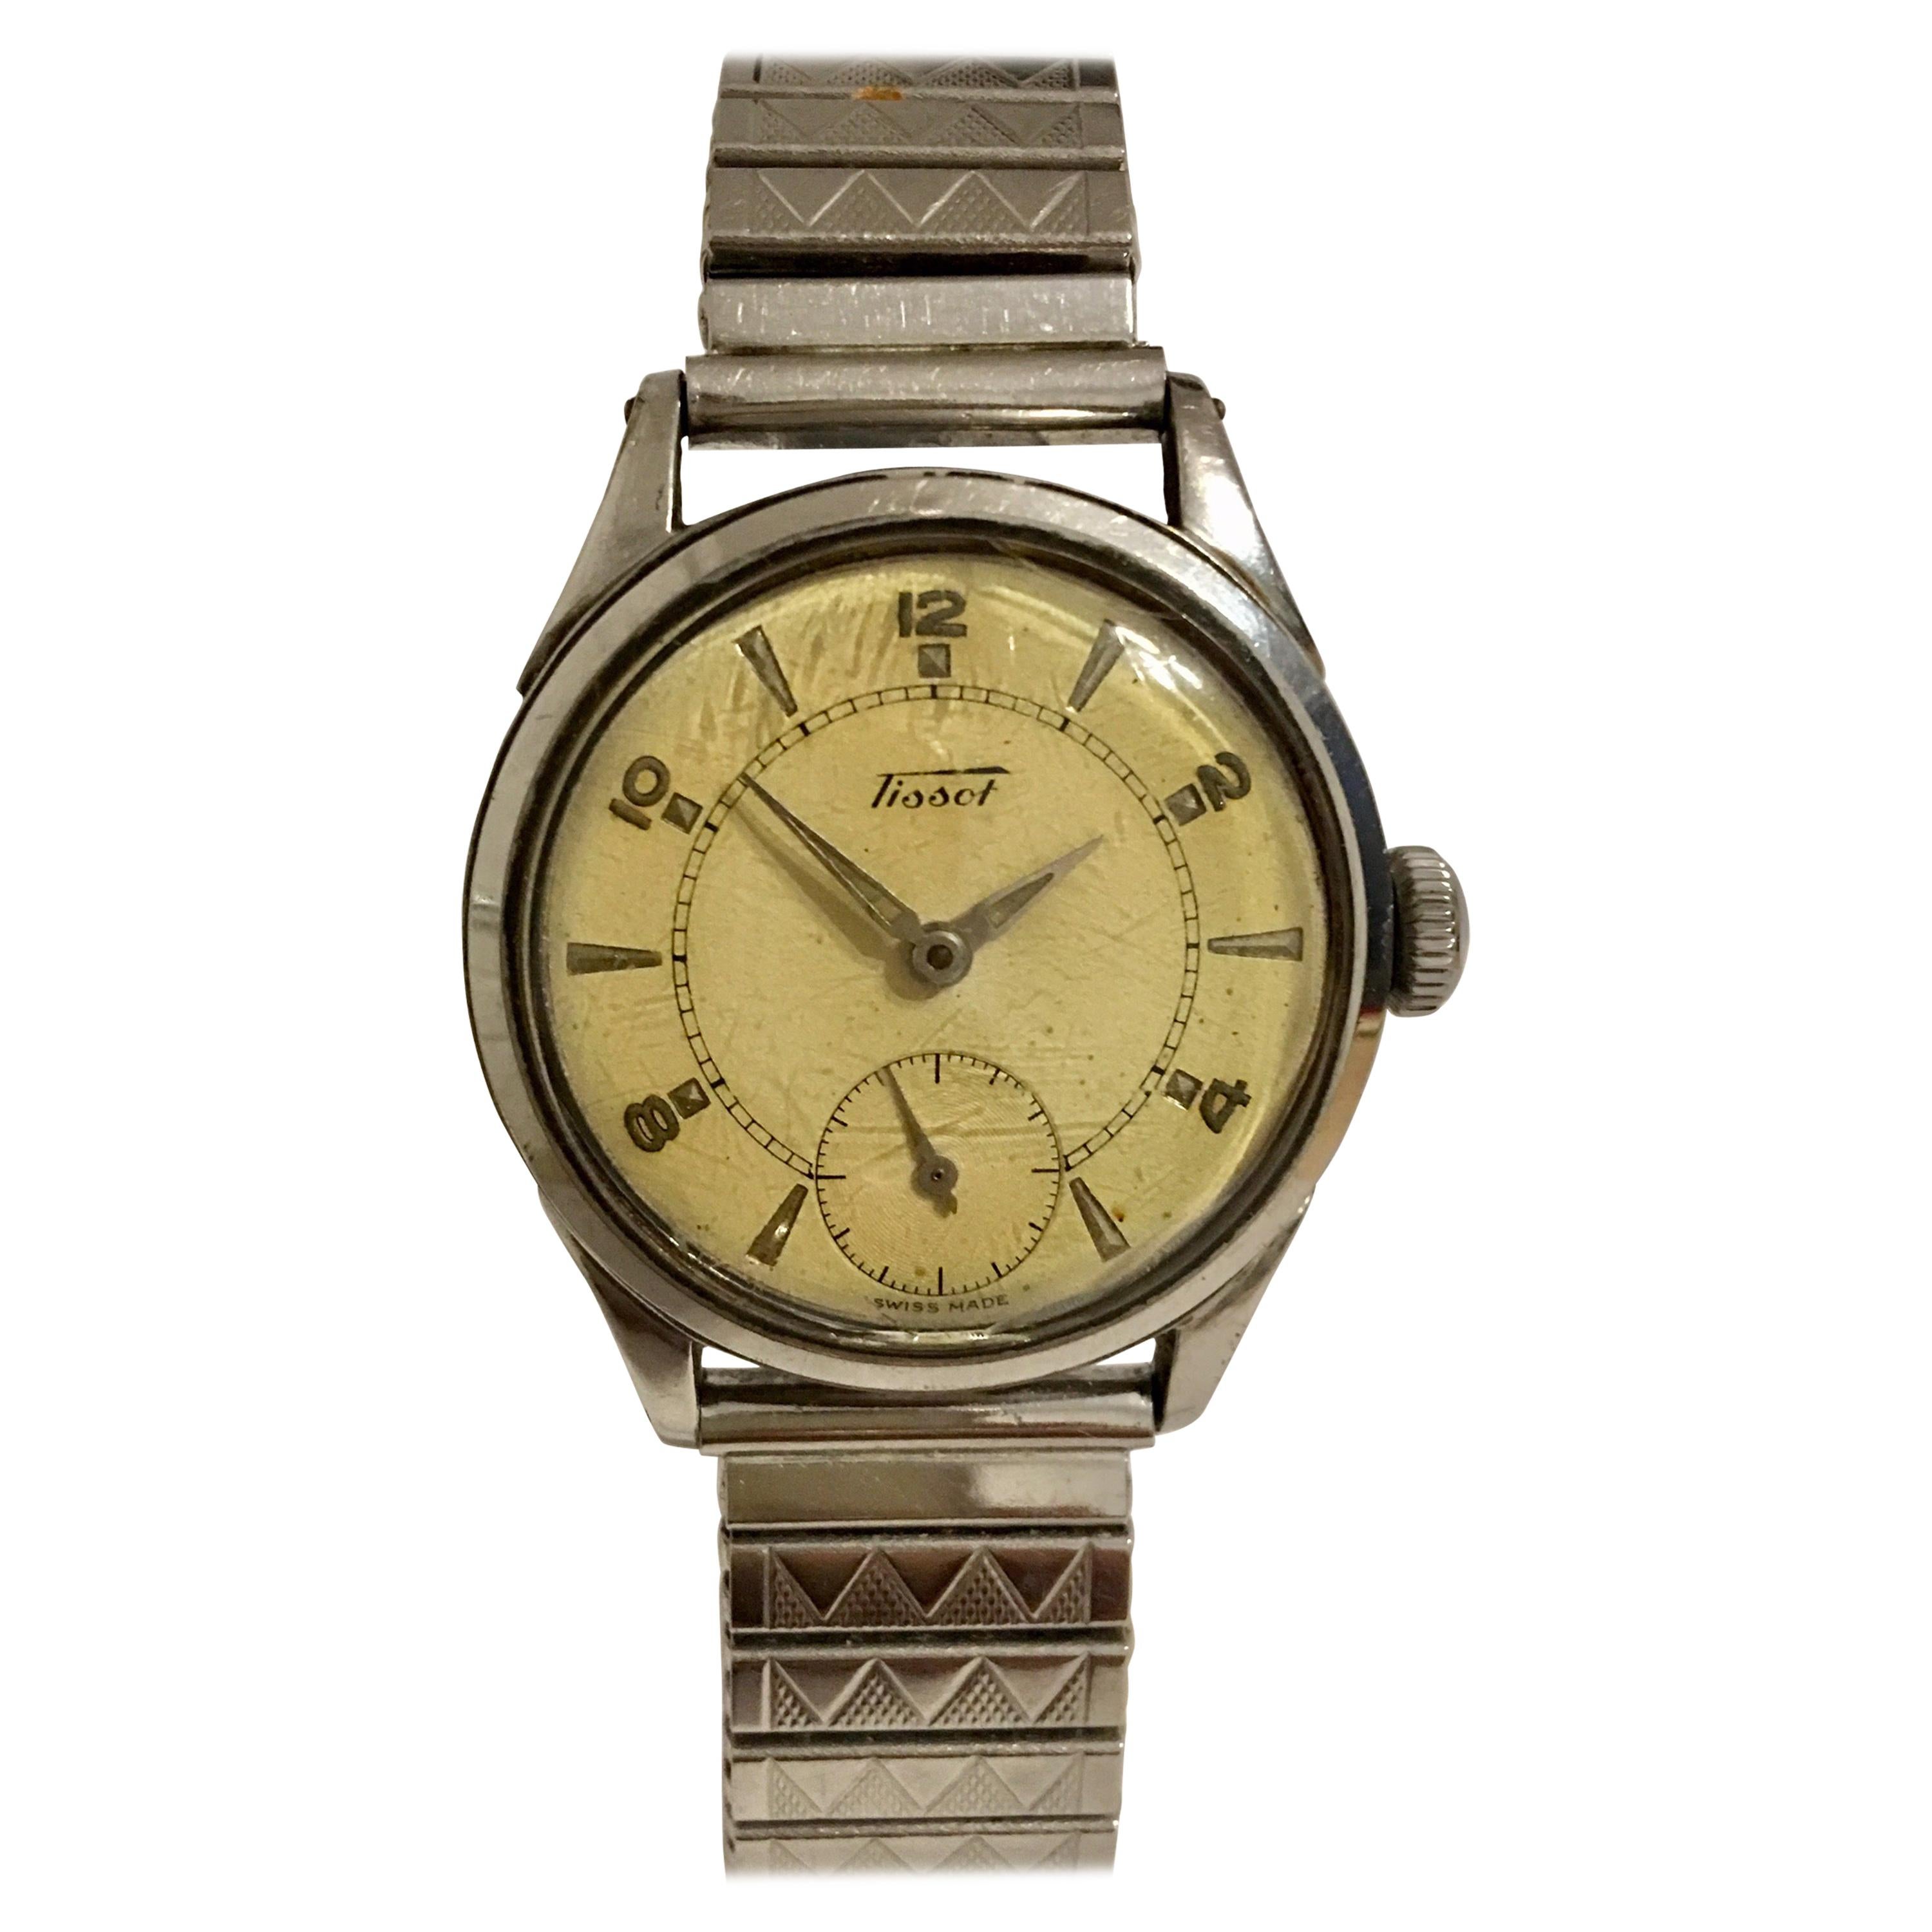 Vintage 1940s Tissot Stainless Steel Watch